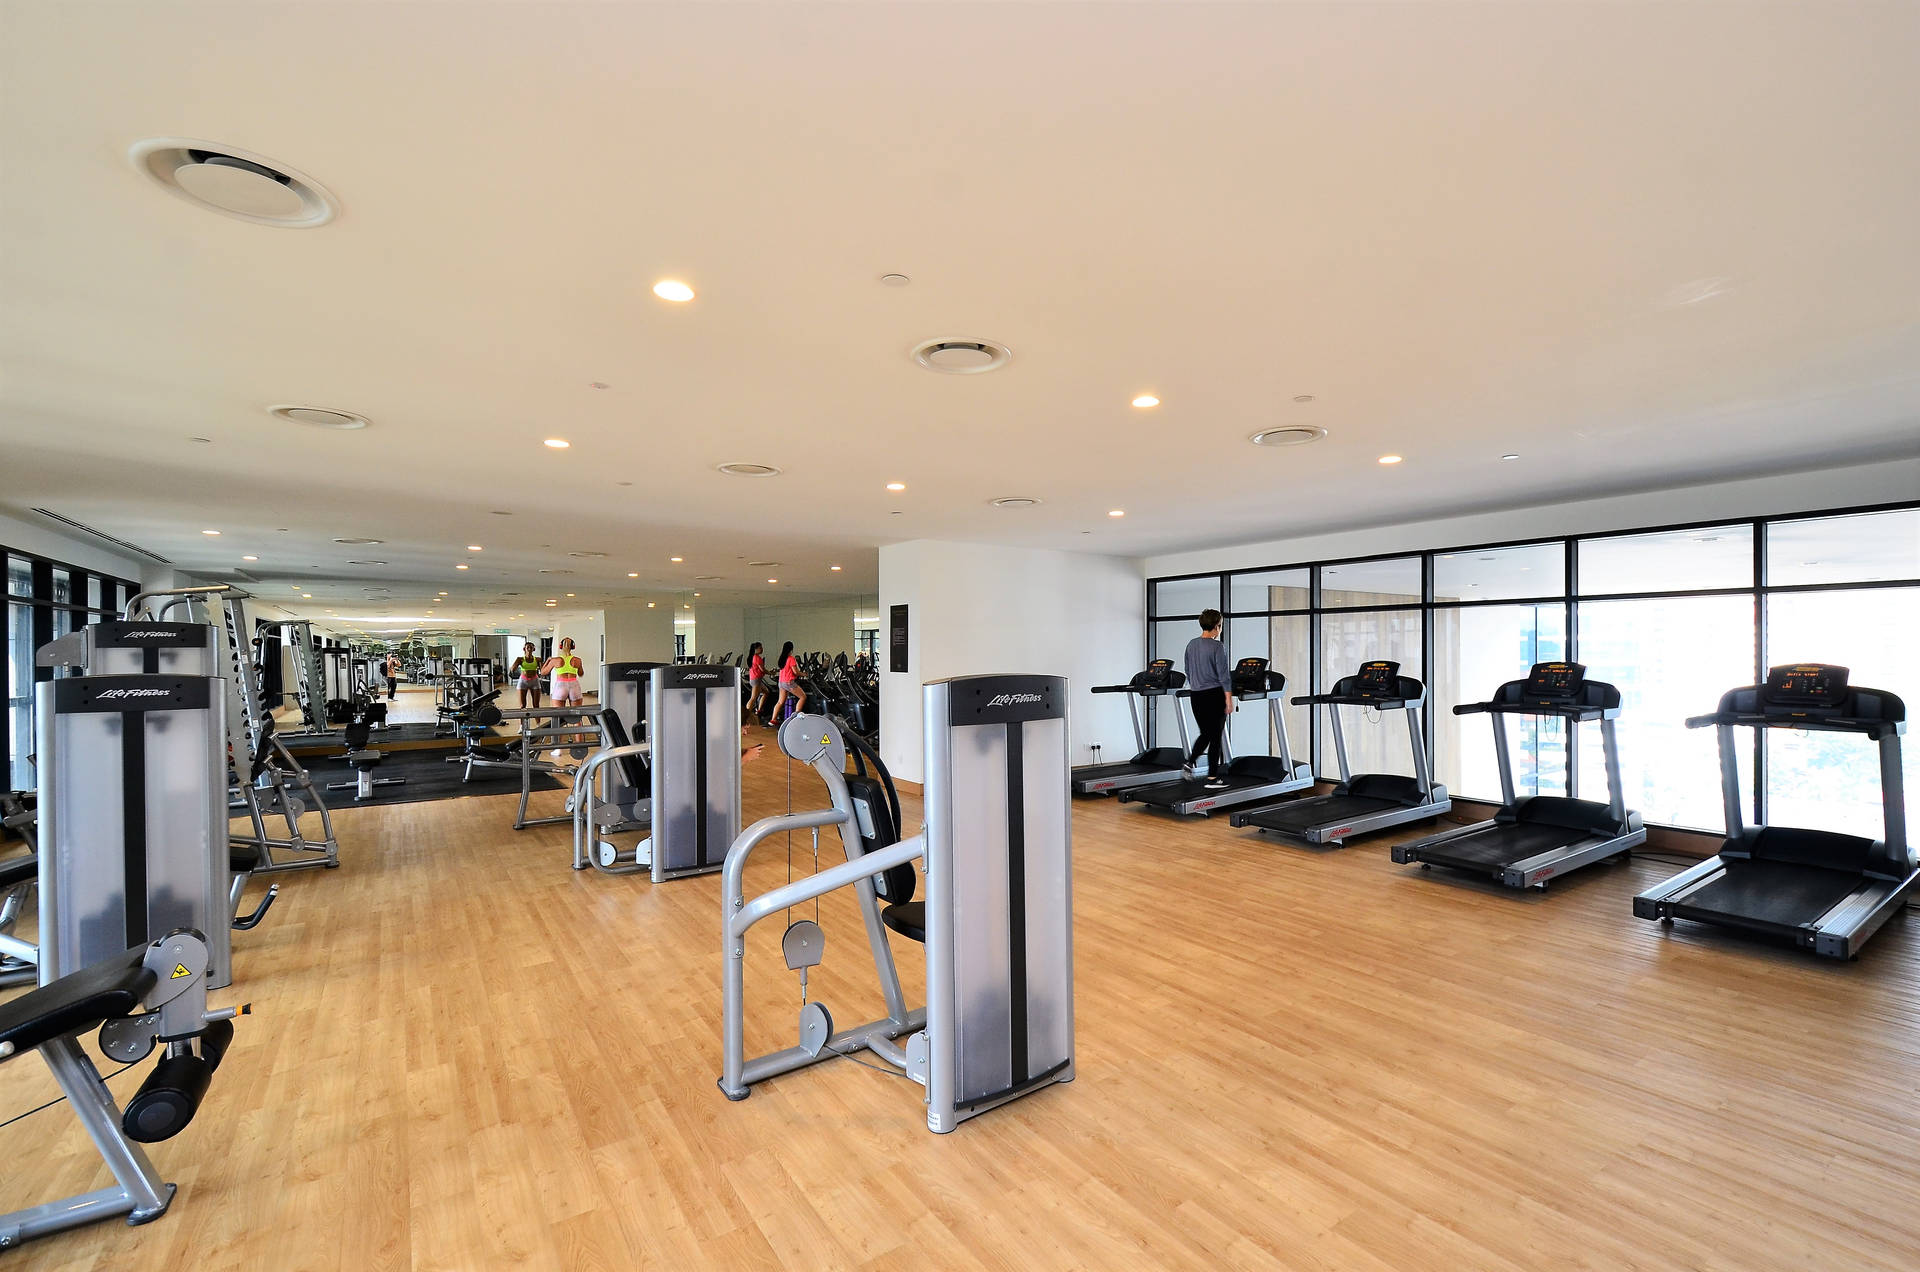 Wood-paneled Gym With Treadmills